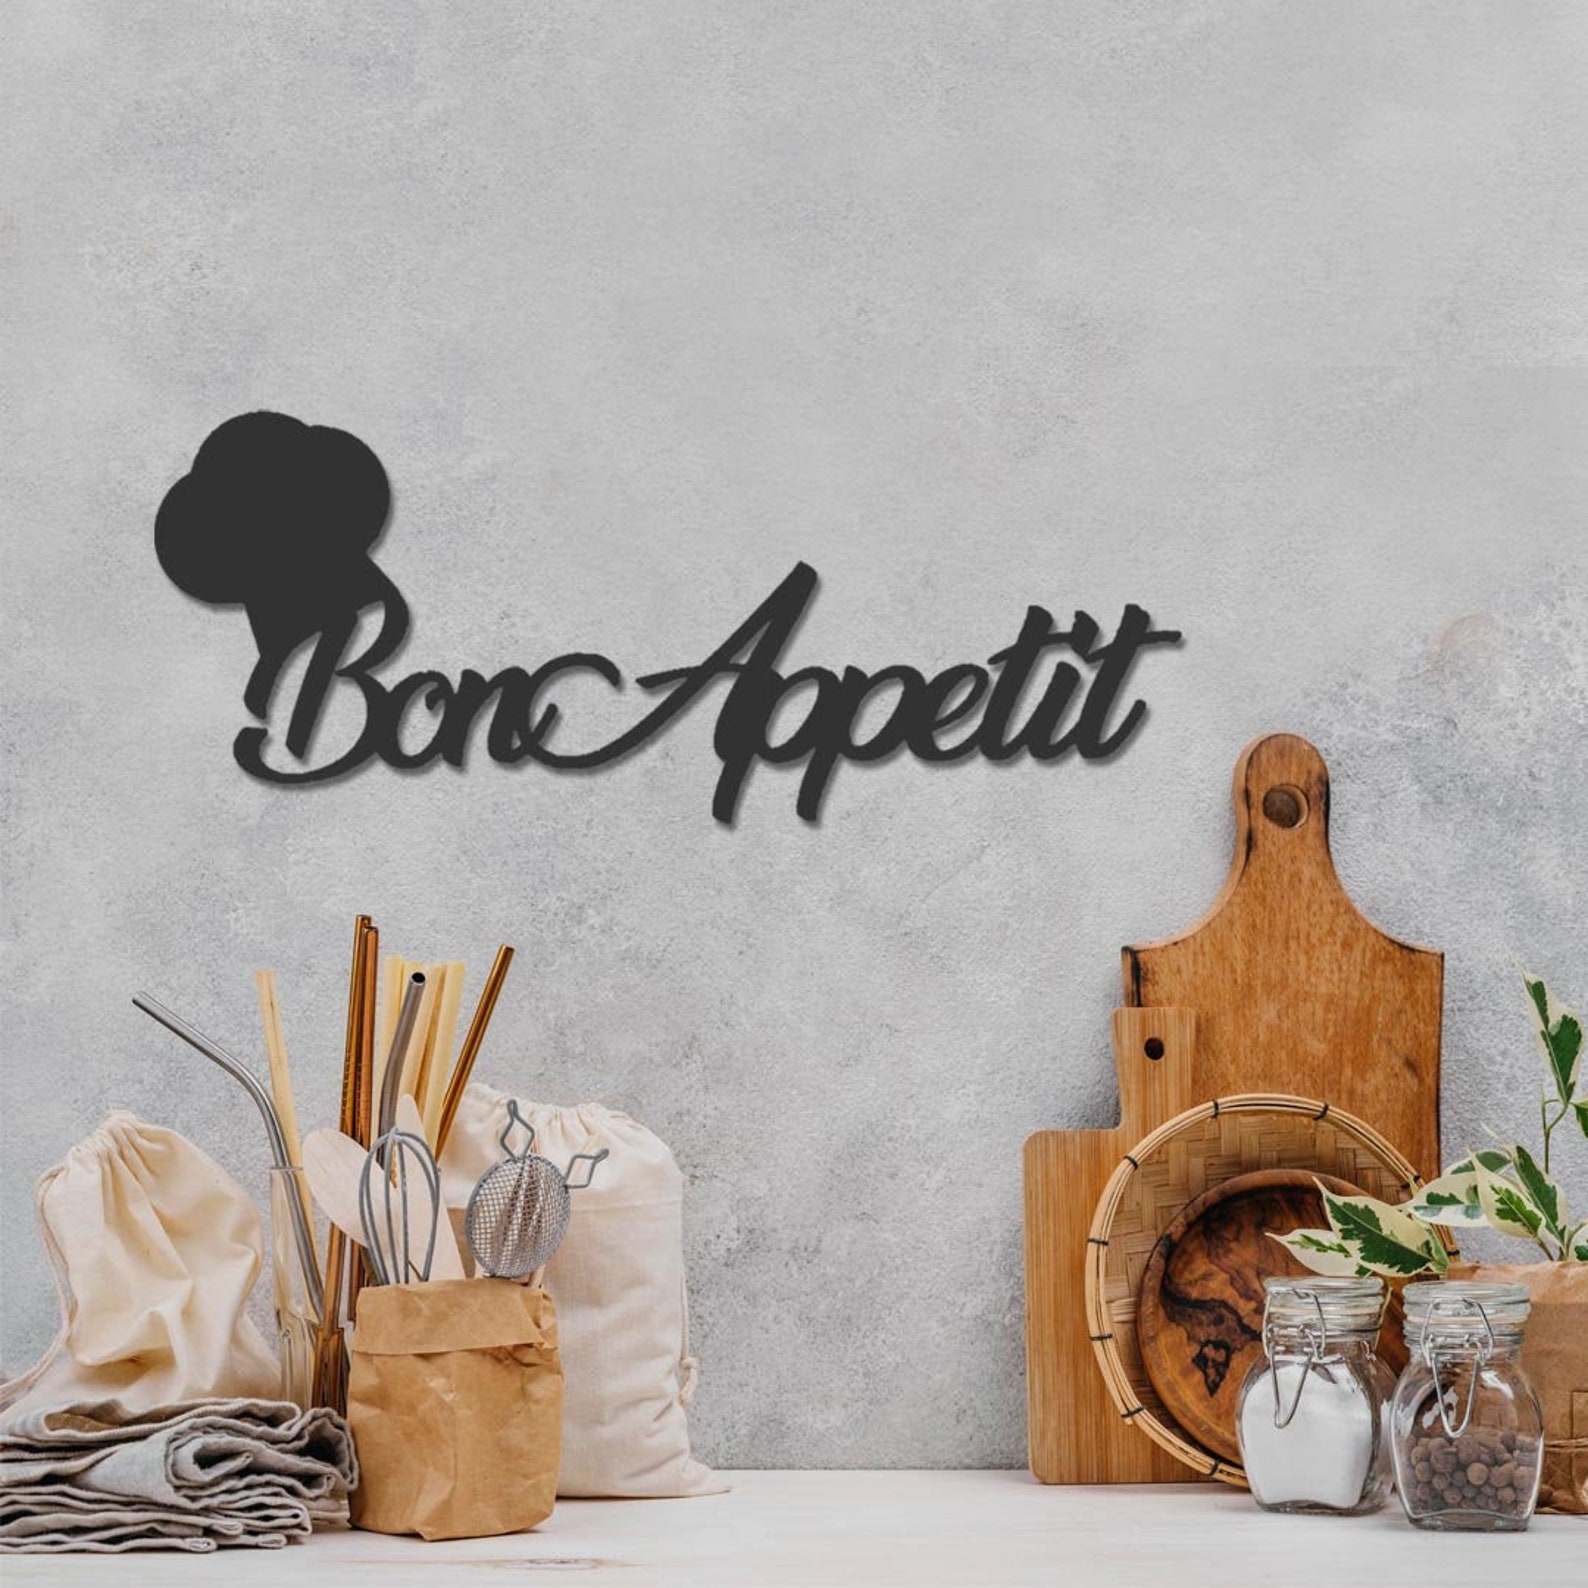 Bon Appetit Wooden Wall Art Wooden Wall Decor Wall Hangings | Etsy